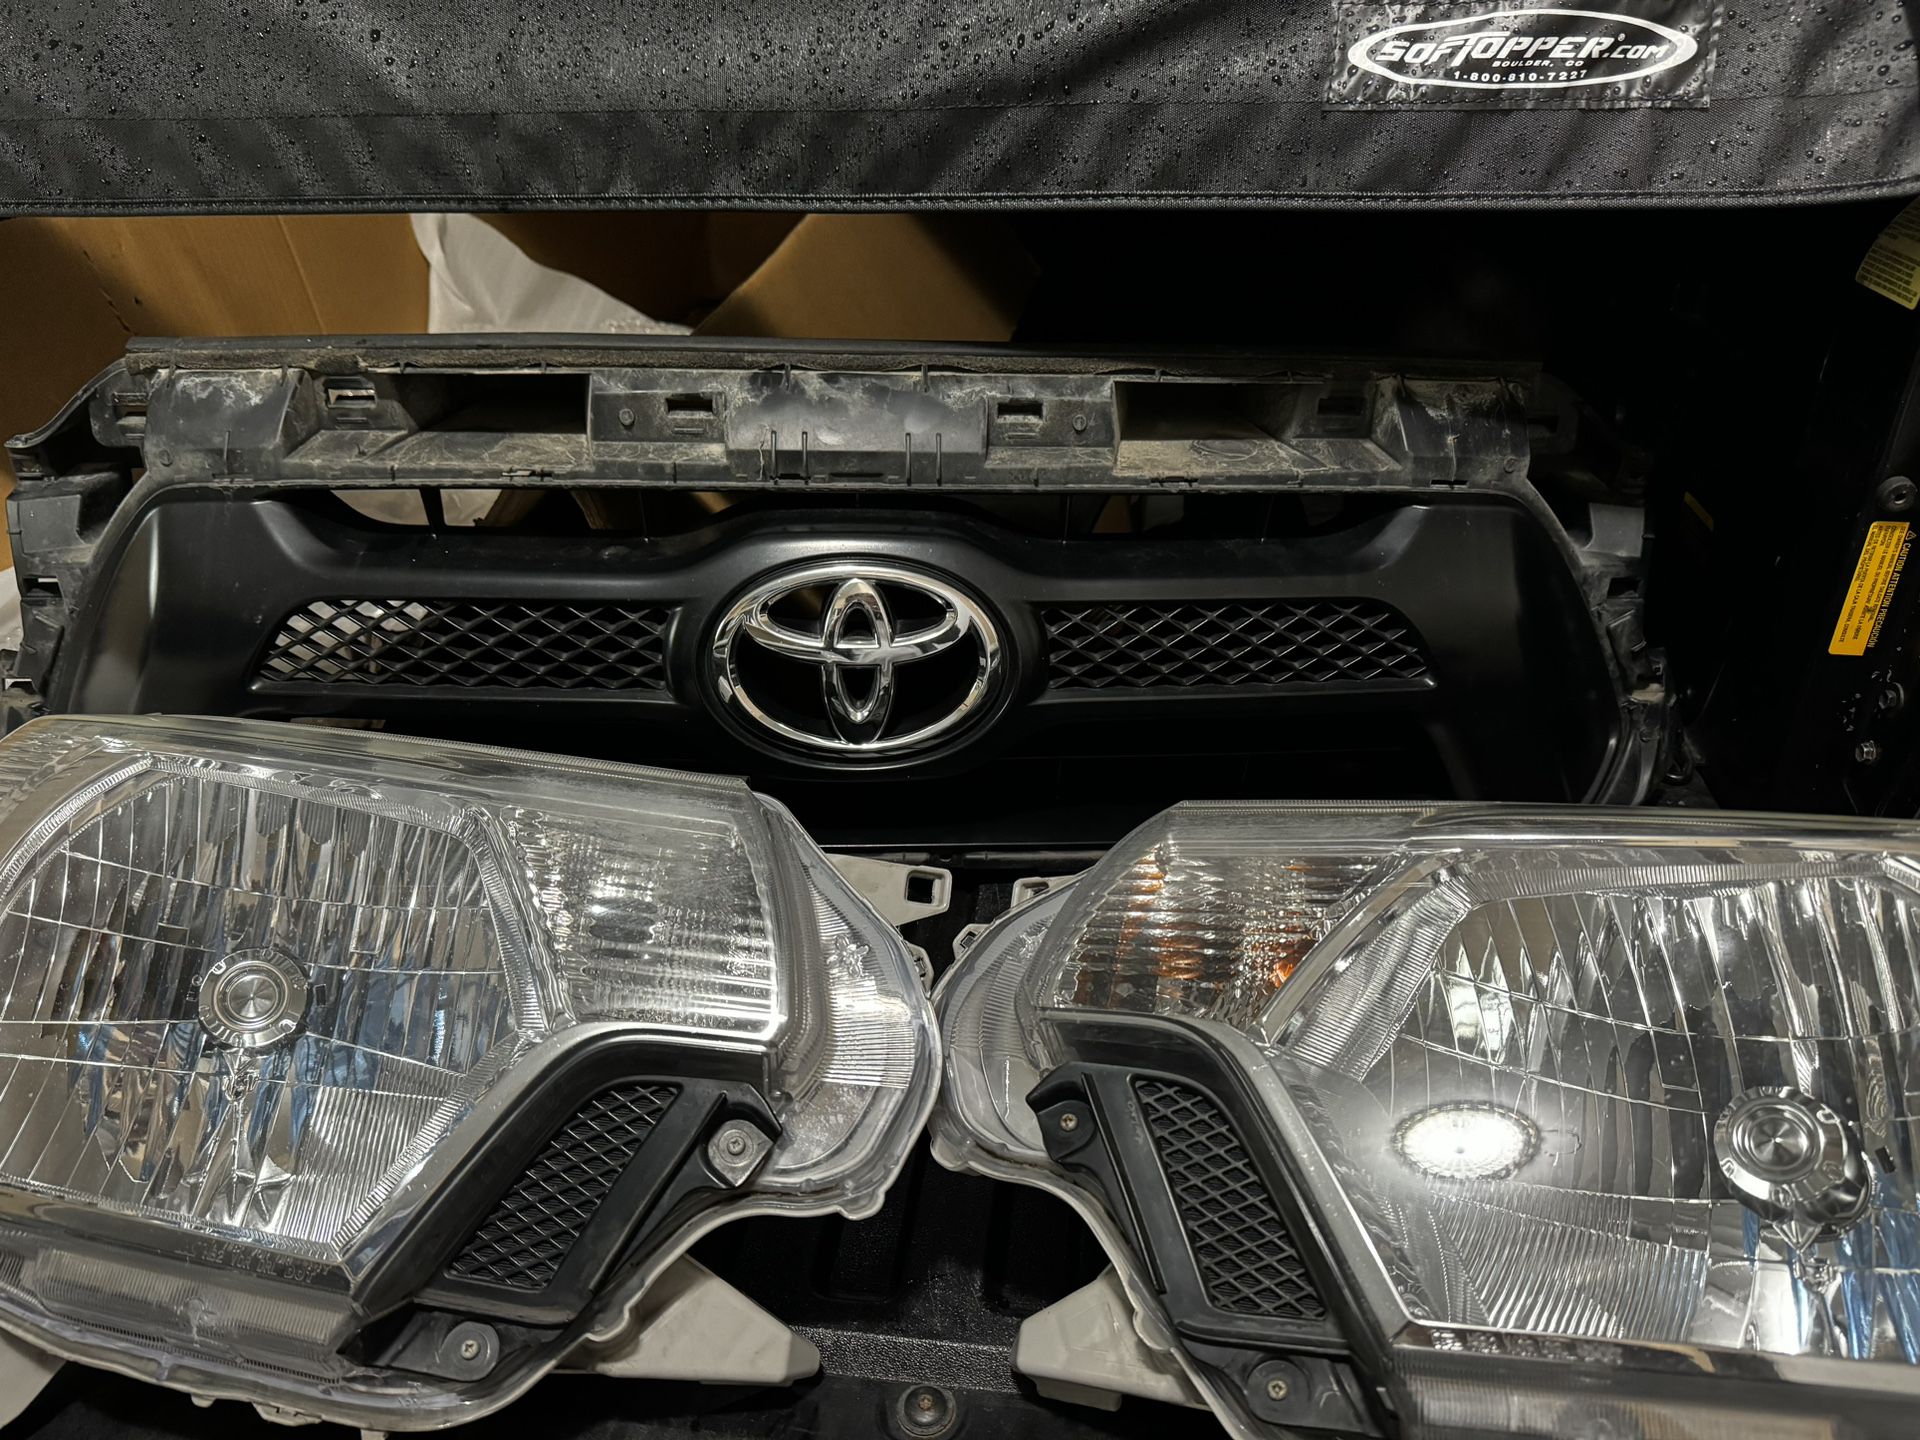 Toyota Tacoma Headlights And Grill